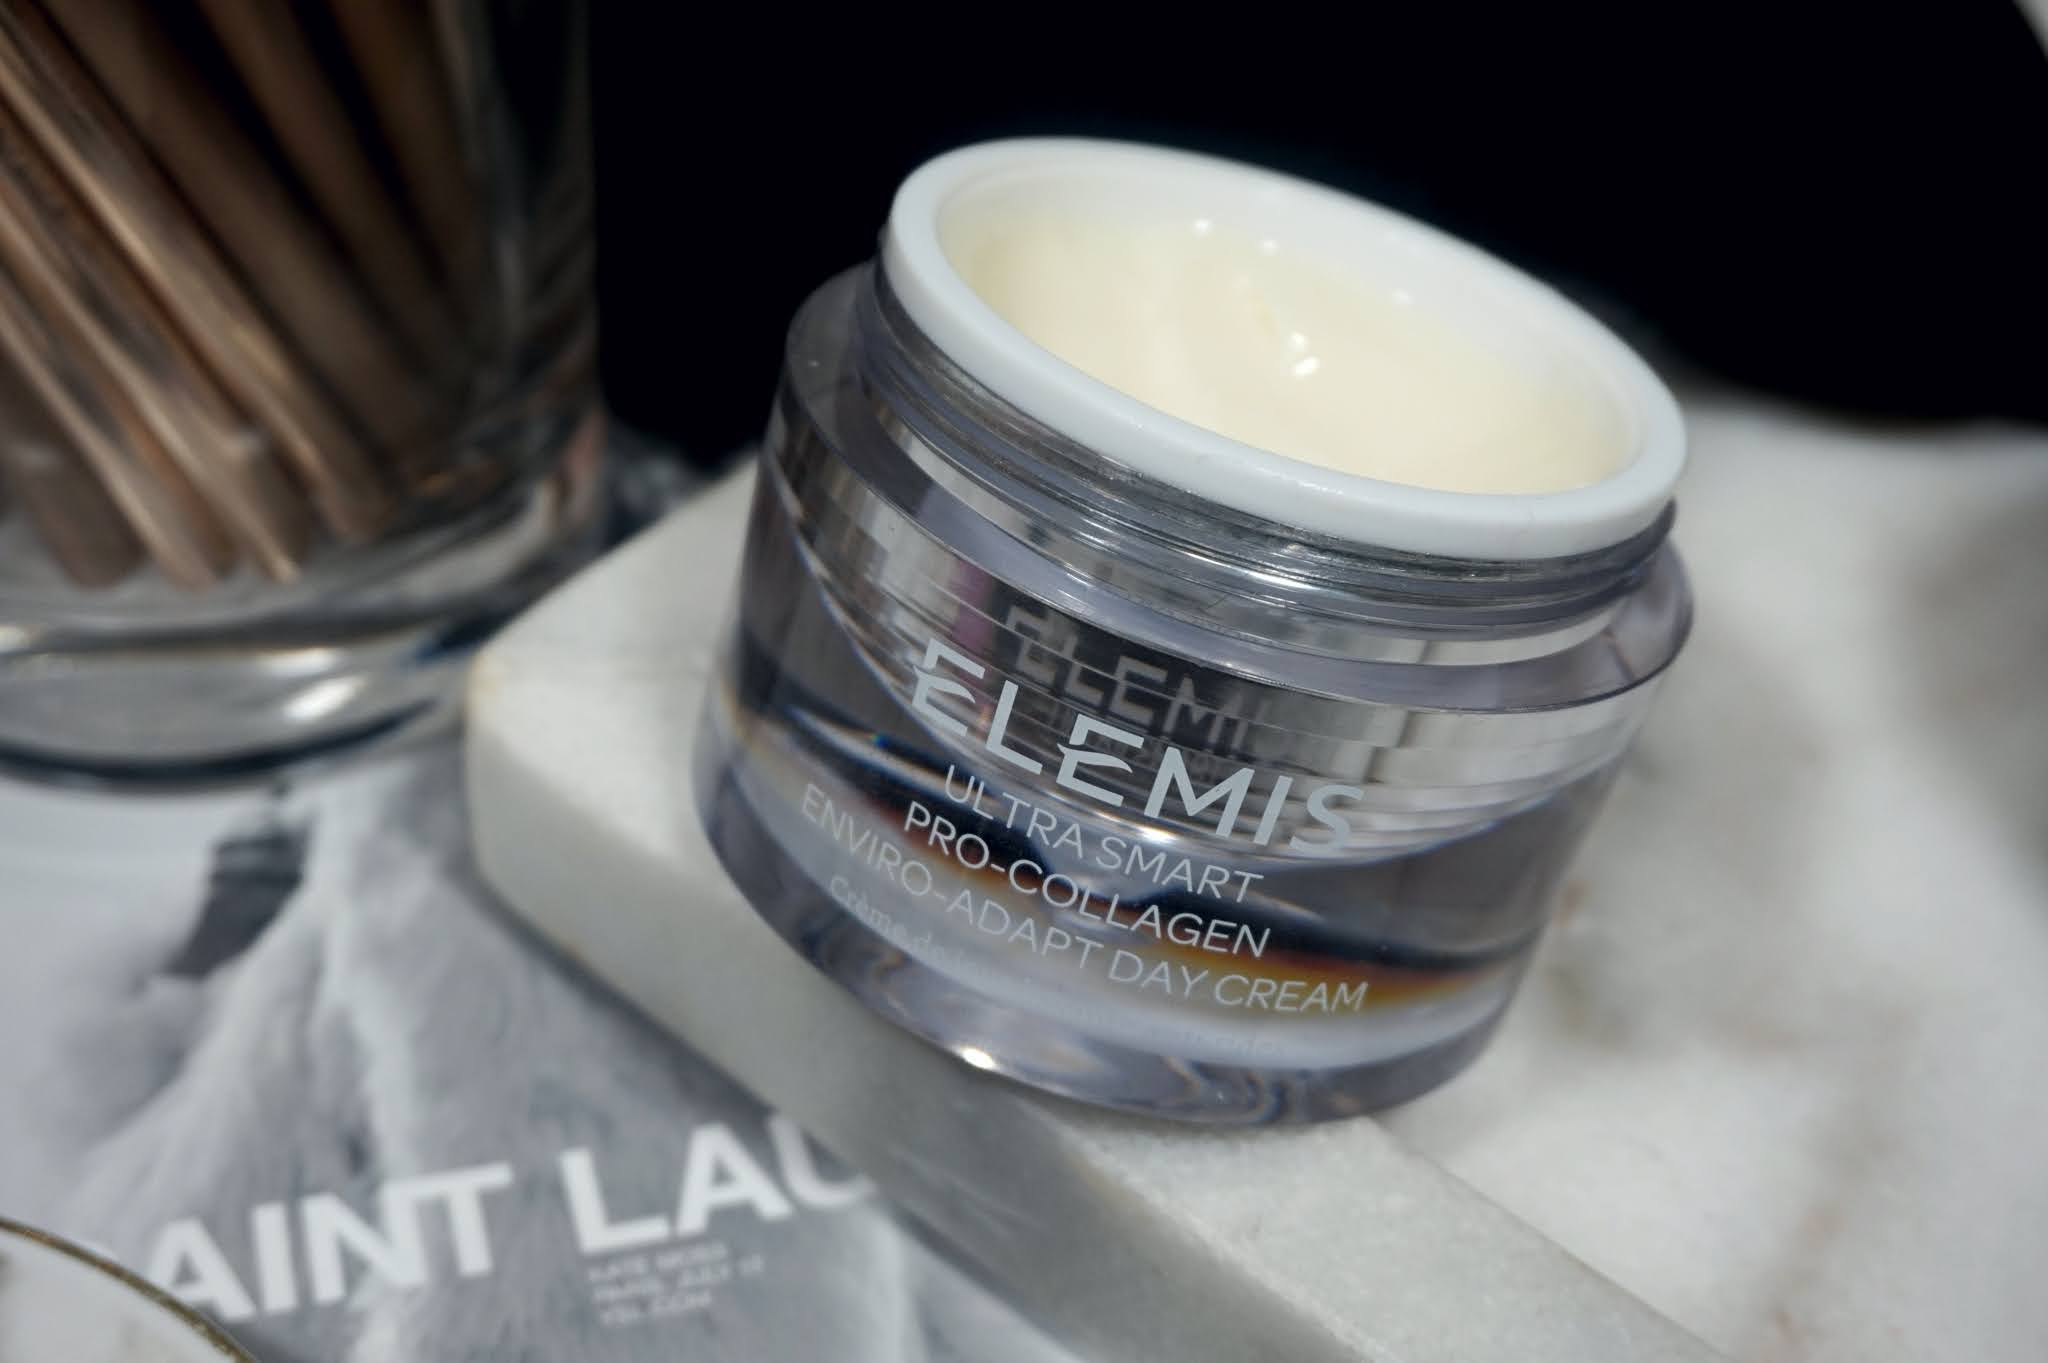 Elemis ULTRA SMART Pro-Collagen Enviro-Adapt Day Cream Review